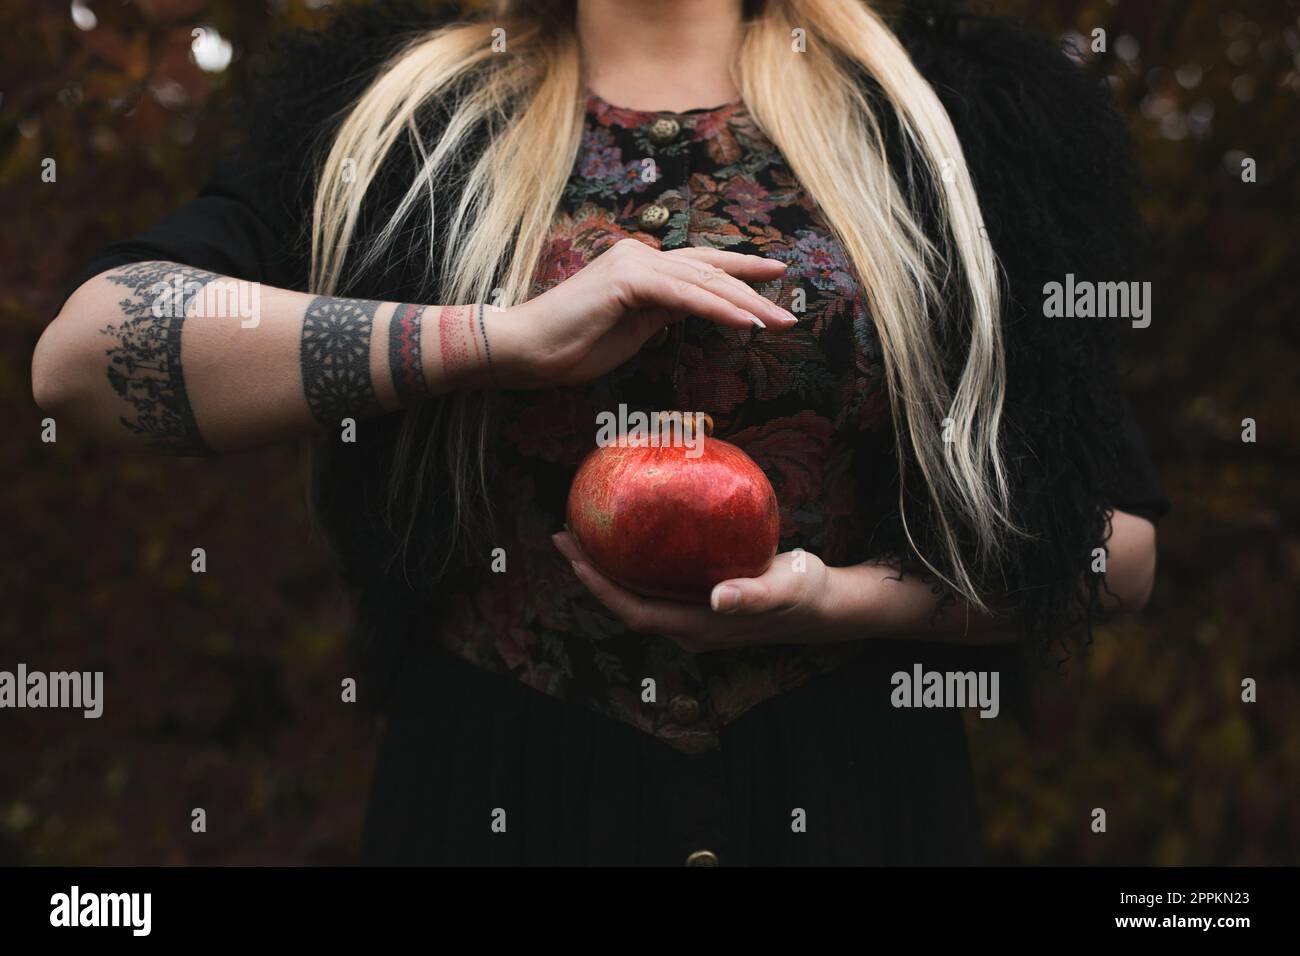 Close up woman holding pomegranate concept photo Stock Photo